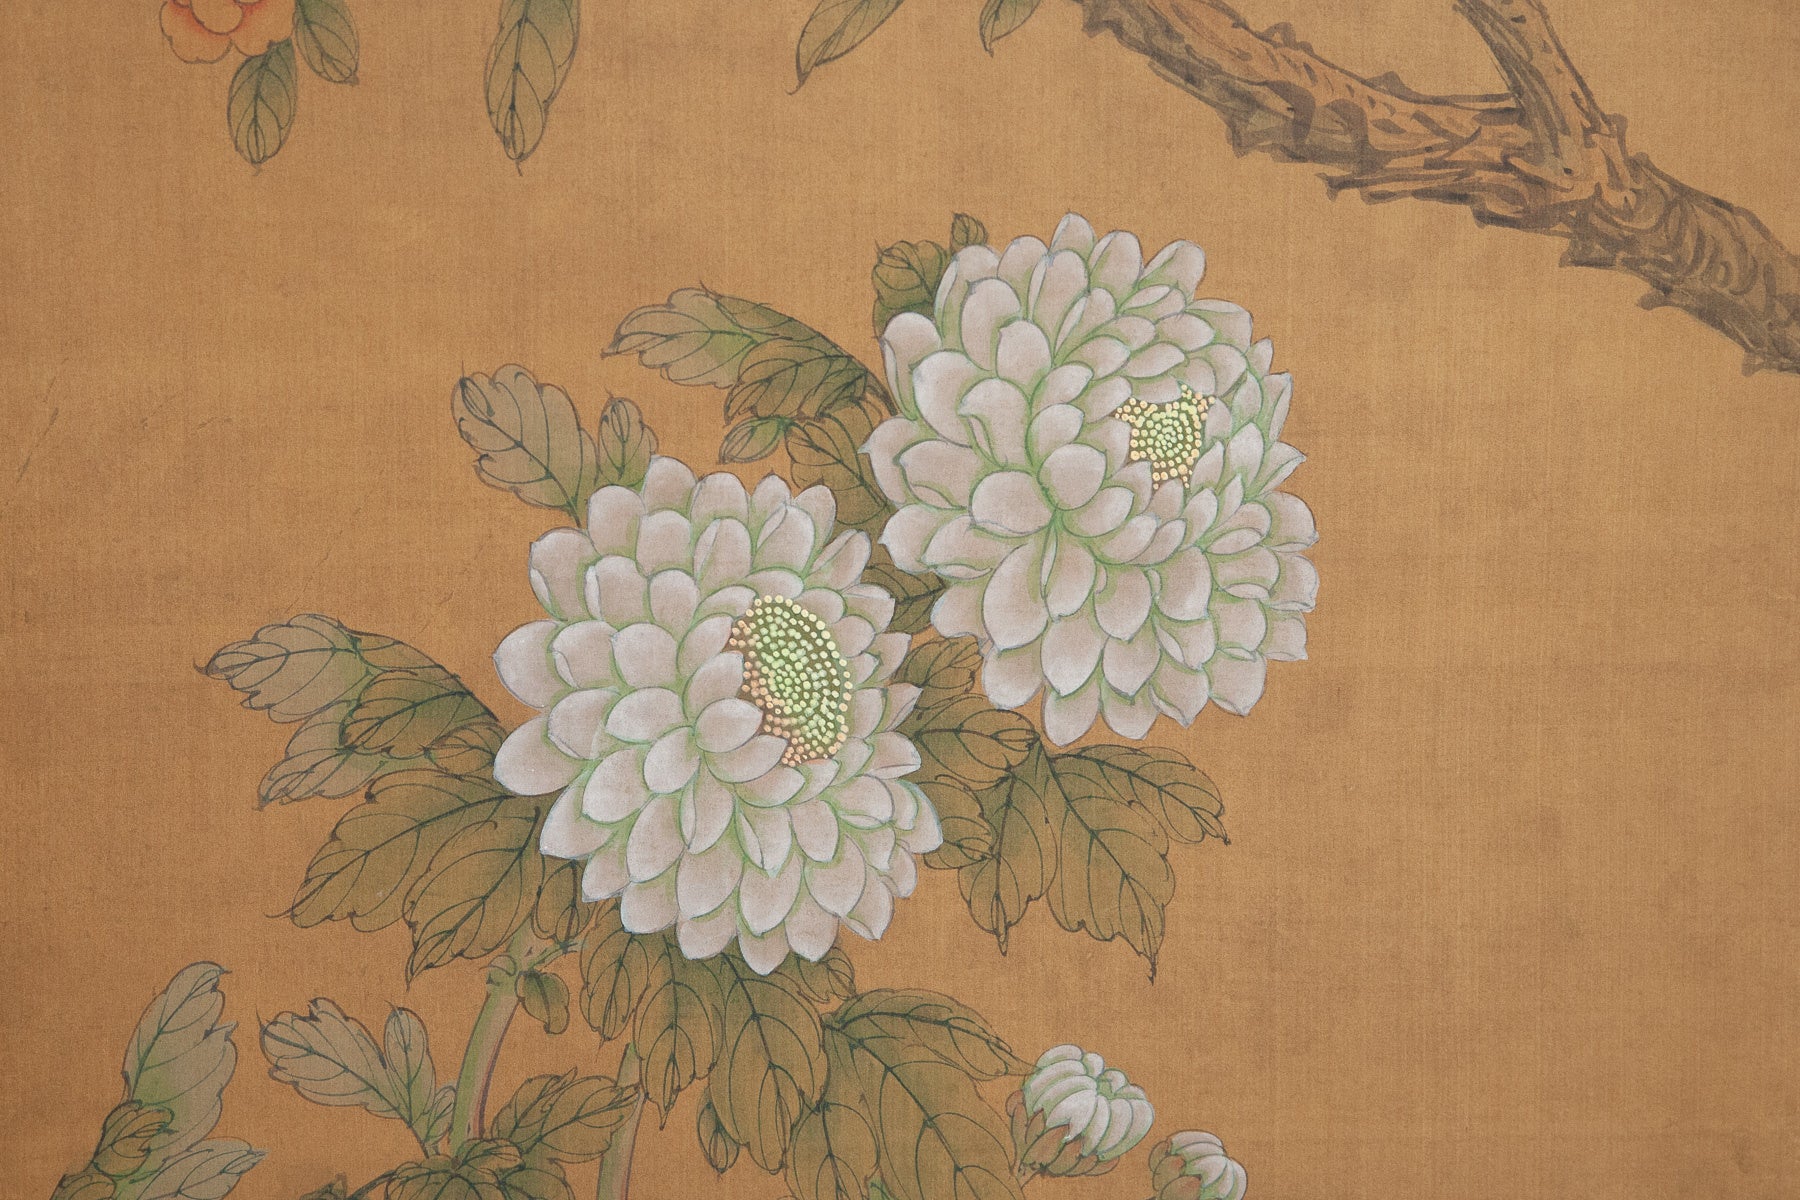 Lawrence & Scott Master Sung Tze-Chin "Sakura Garden" 8-Panel Screen